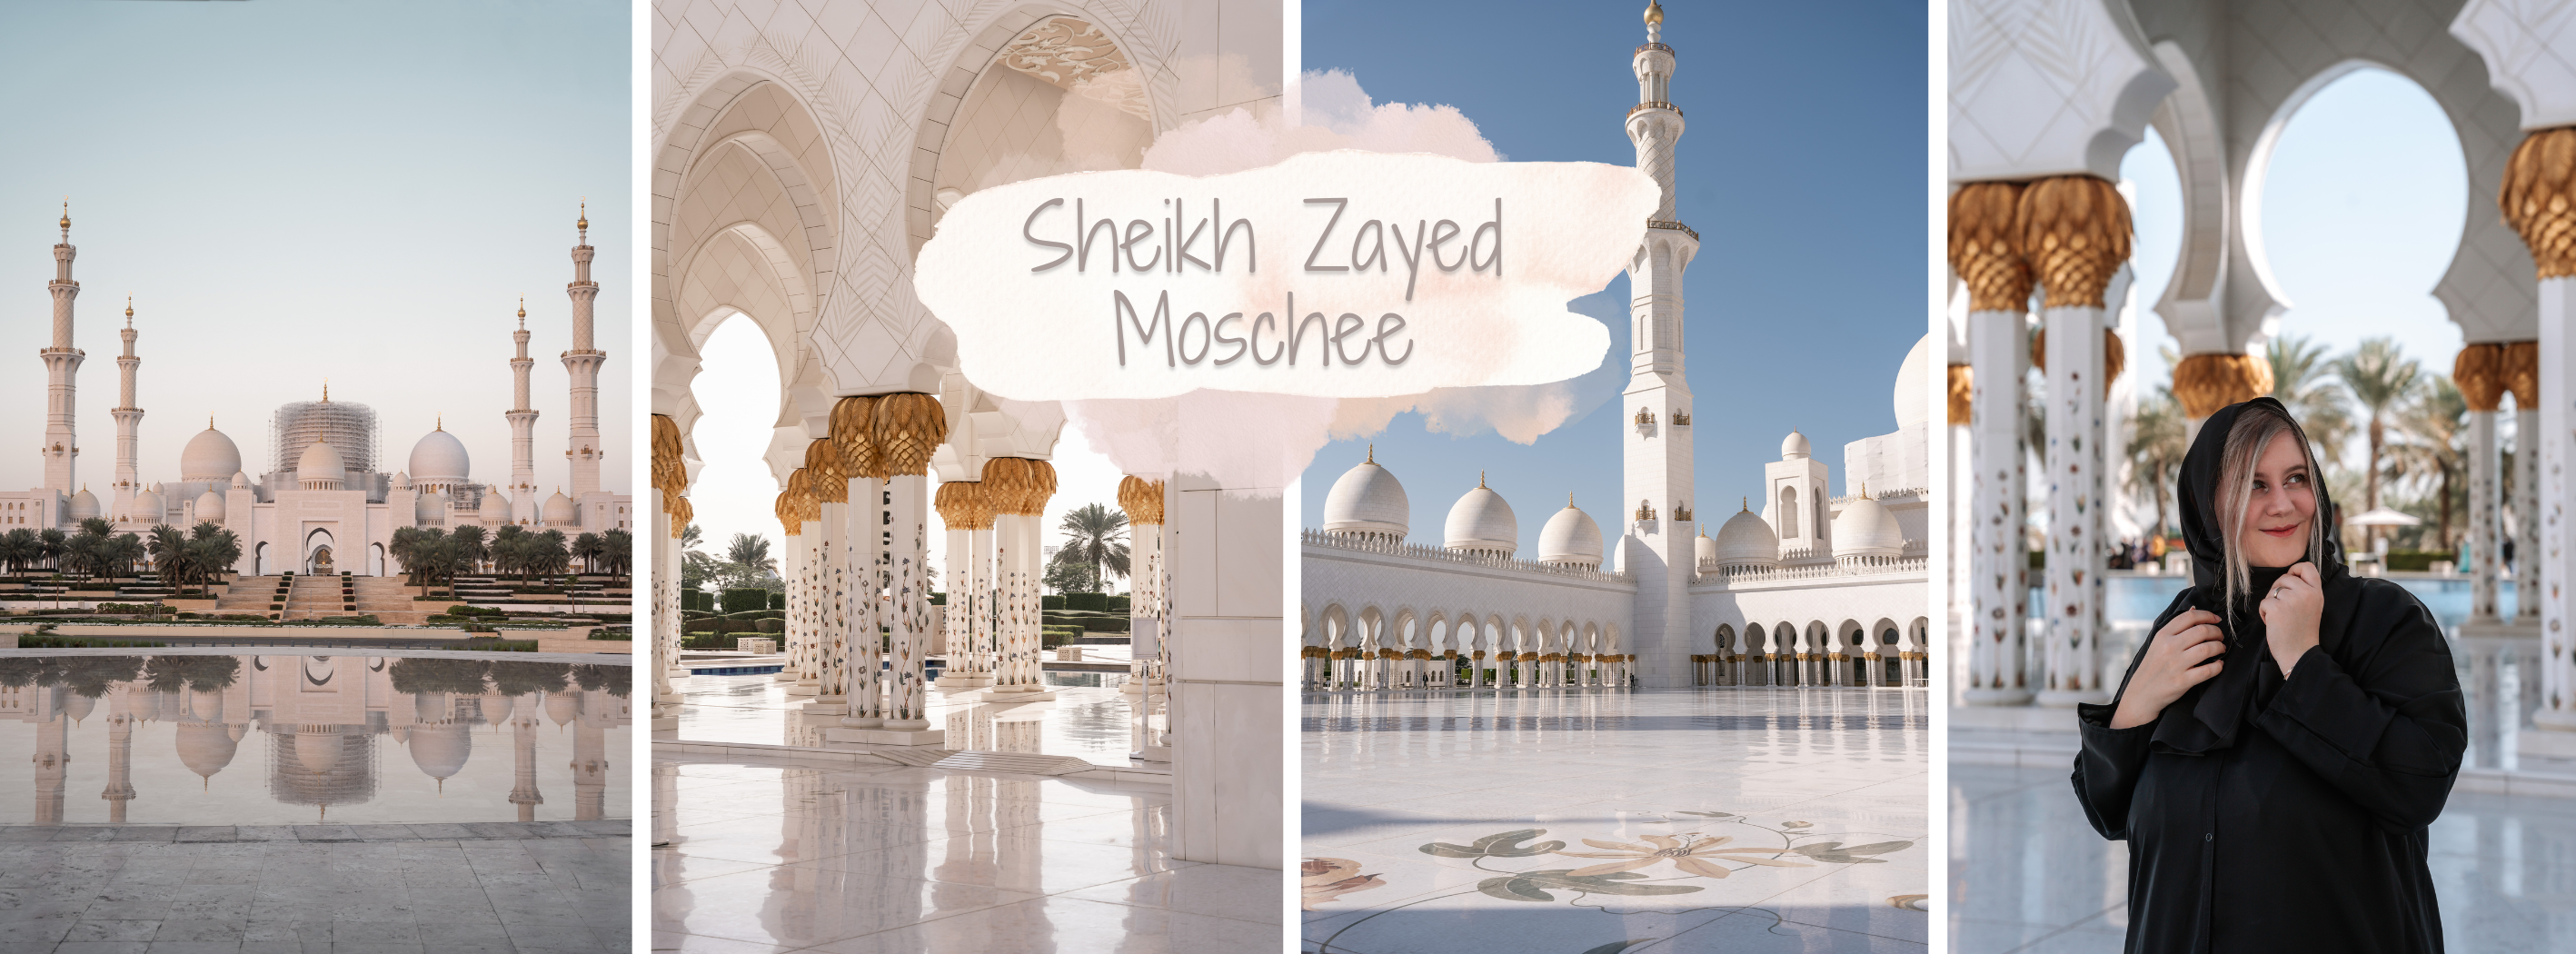 sheikh-zayed-mosque-abu-dhabi-tipps